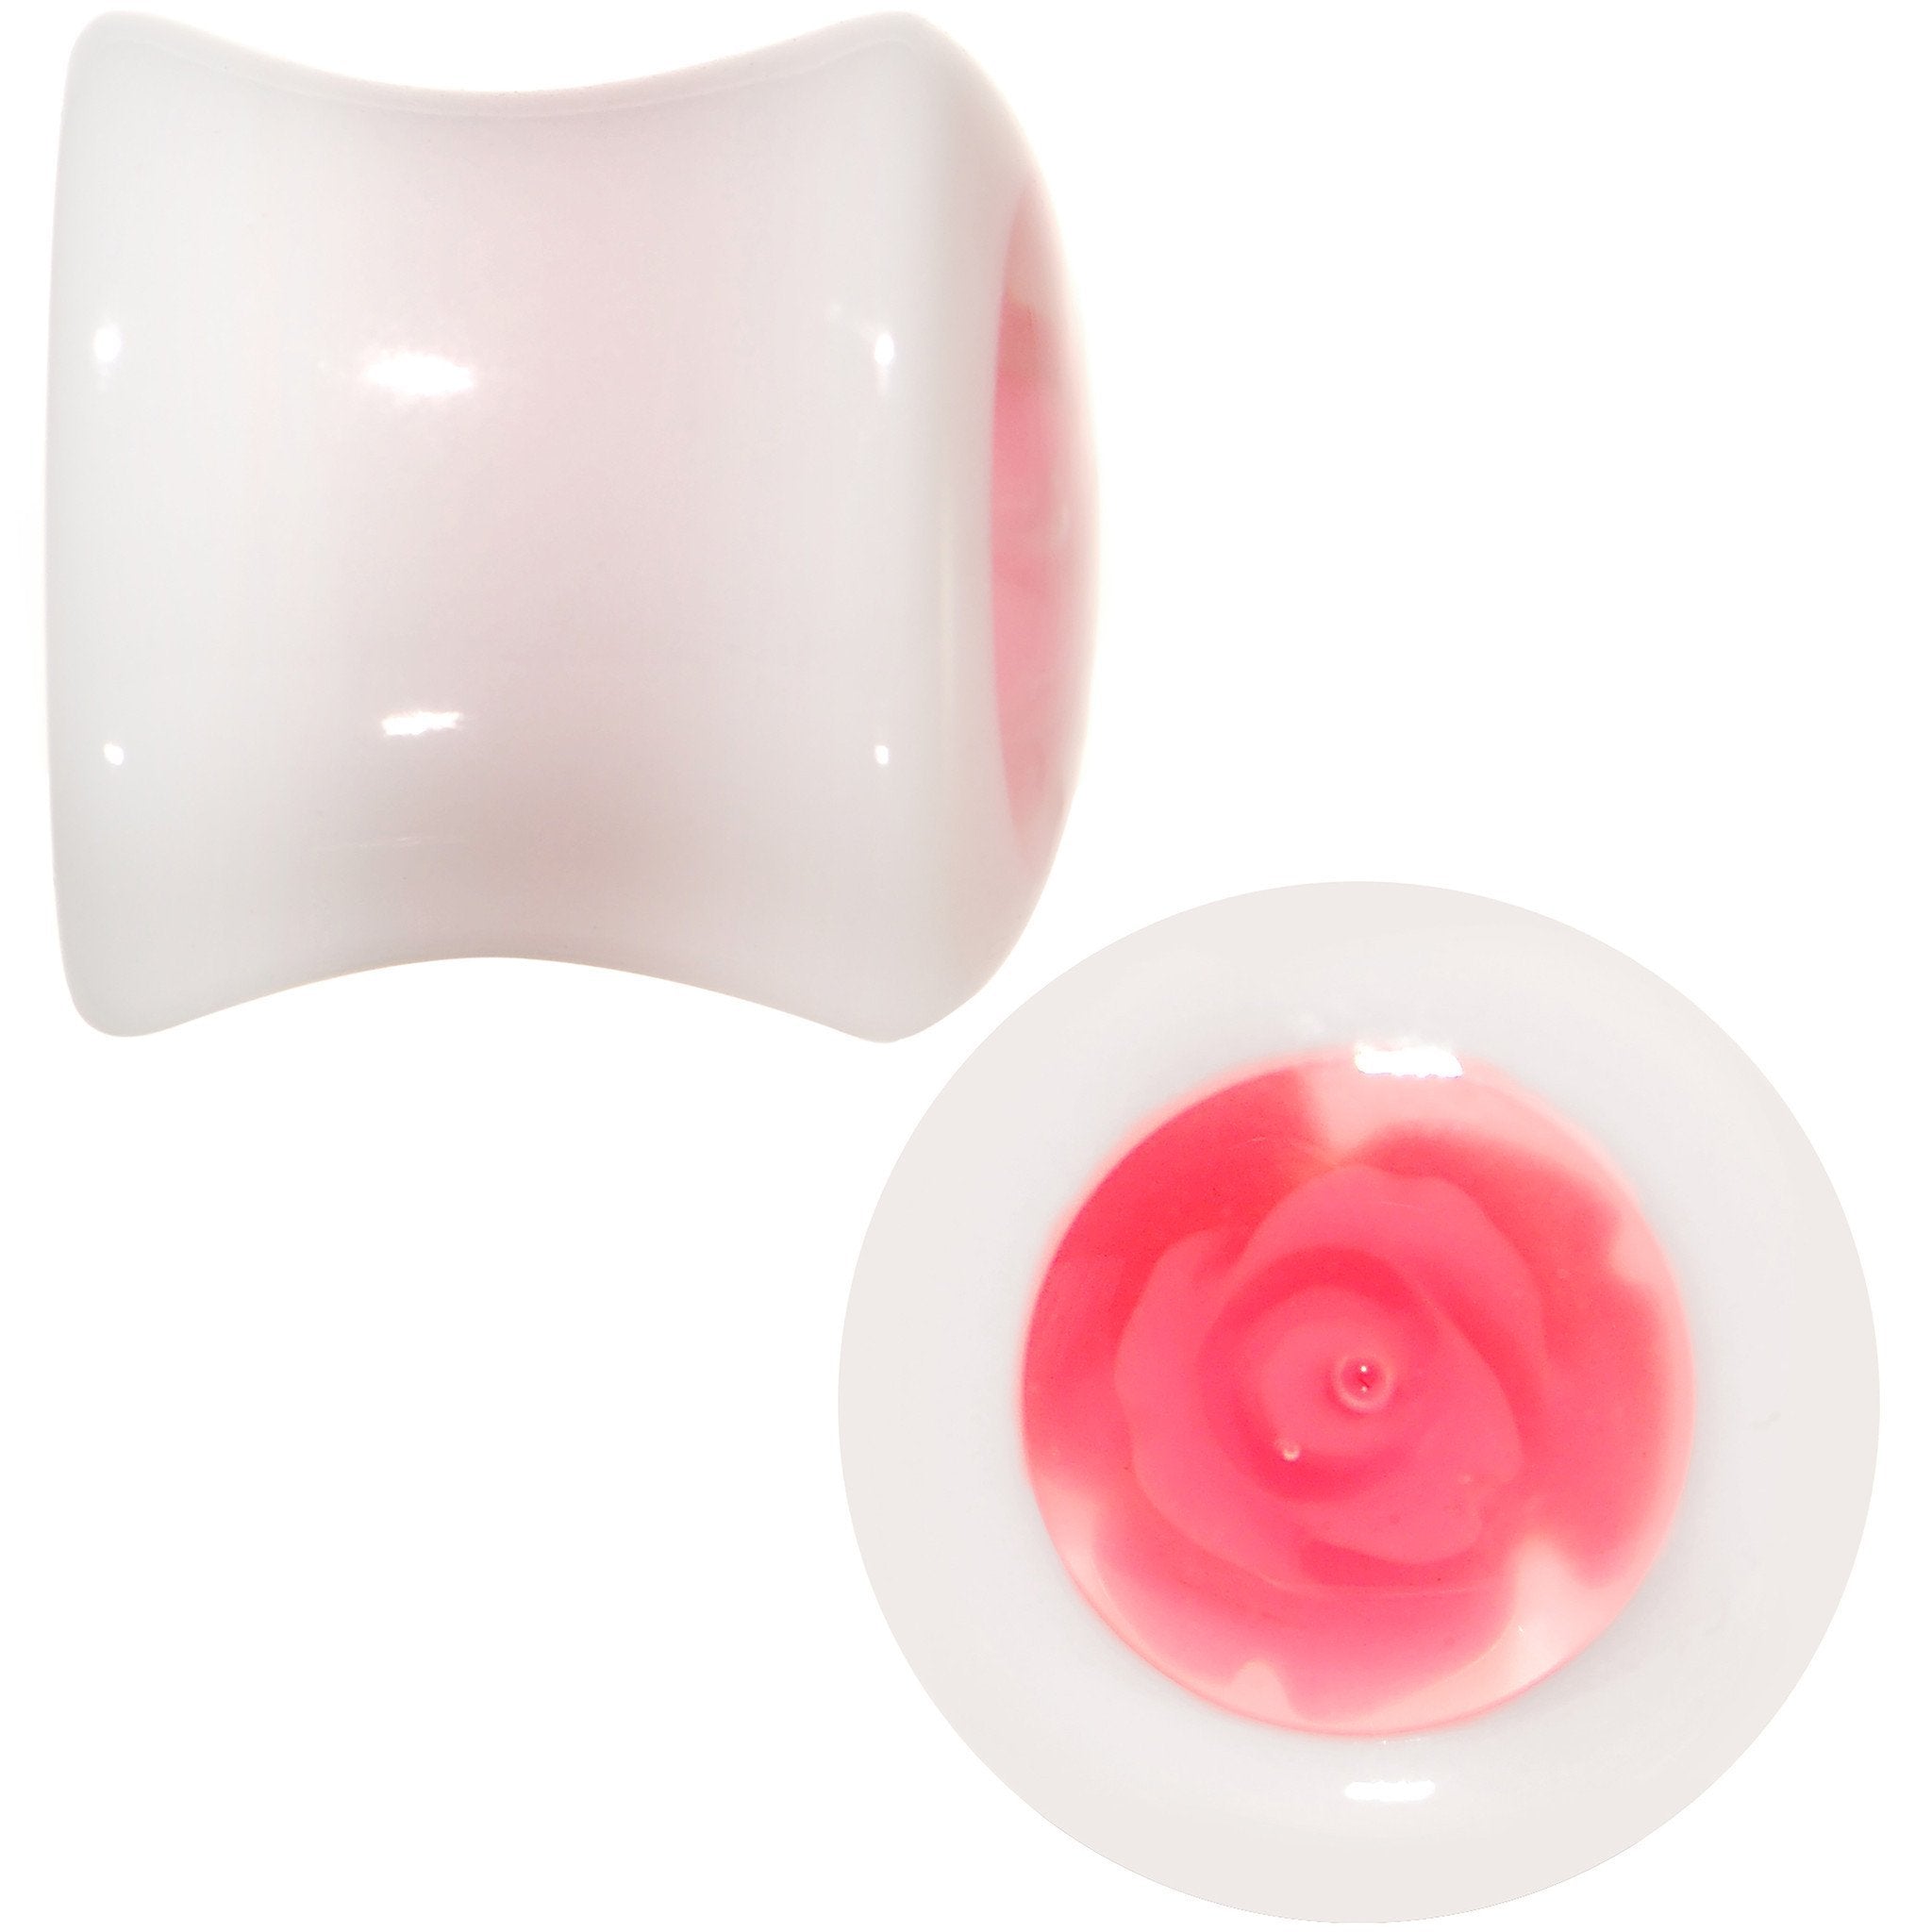 White Acrylic Pink Rose Flower Insert Saddle Plug Set Available in Sizes 00 Gauge to 26mm